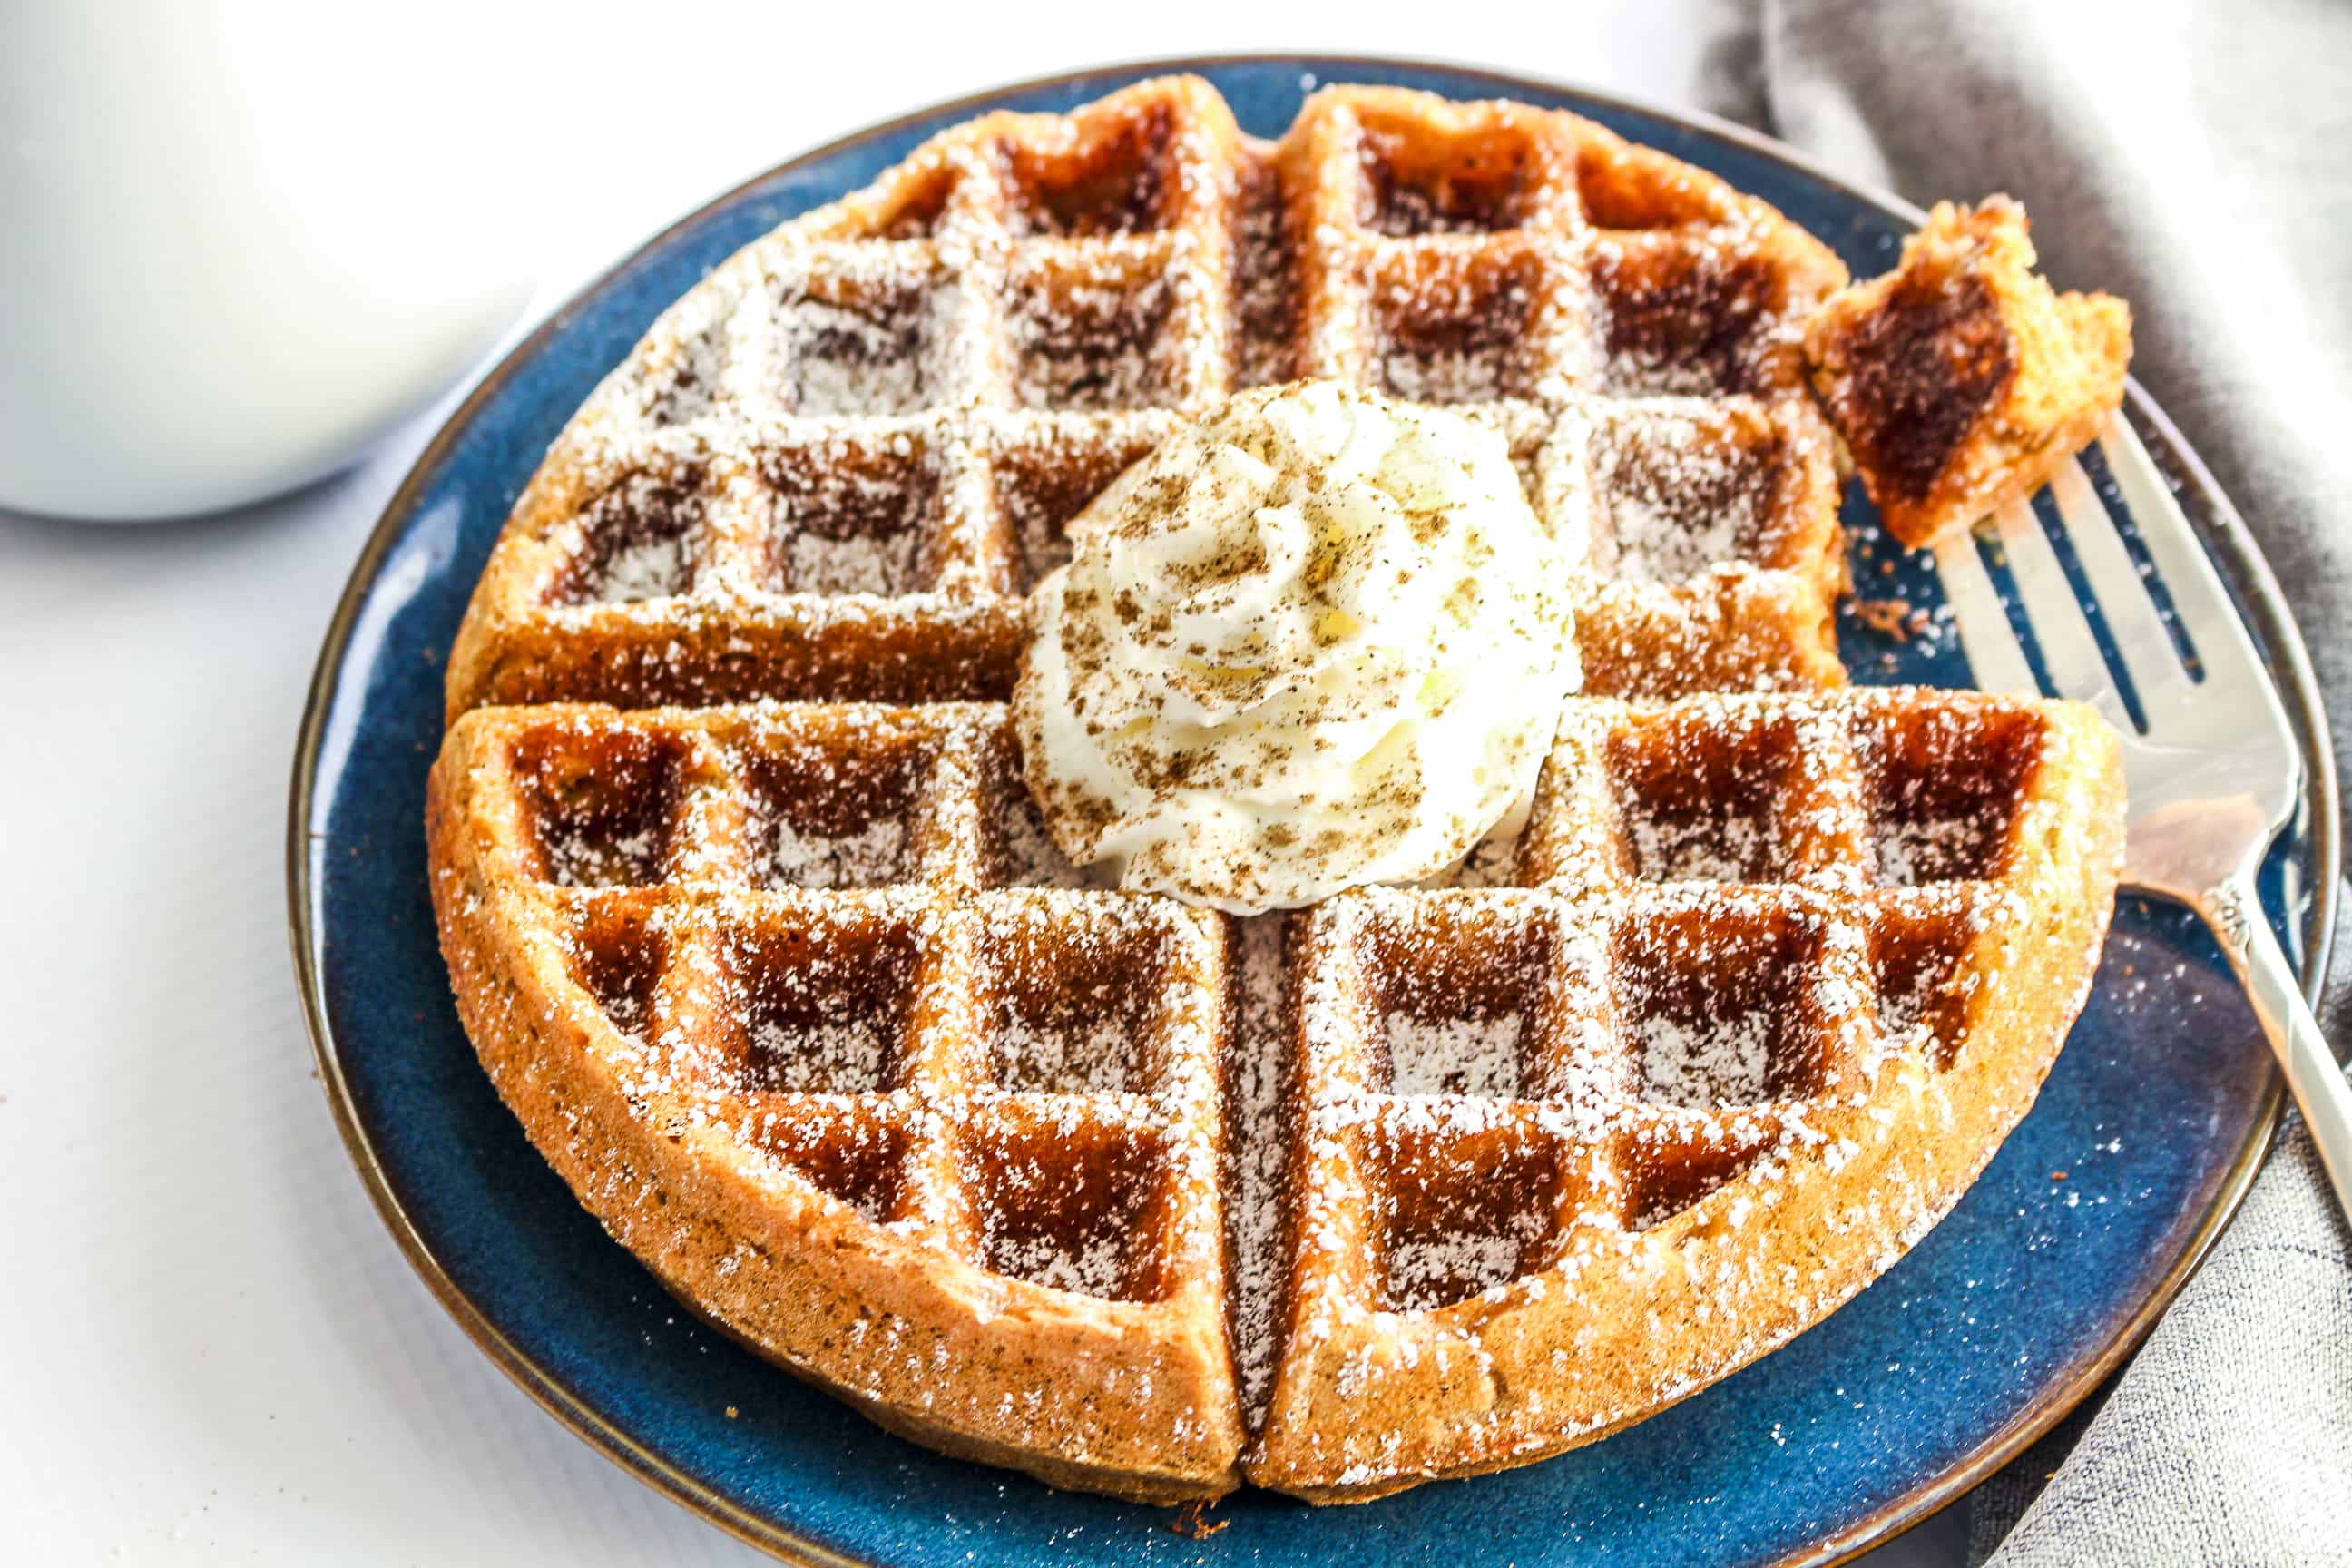 https://thereislifeafterwheat.com/wp-content/uploads/2015/12/Gluten-Free-Gingerbread-Waffles-4.jpg